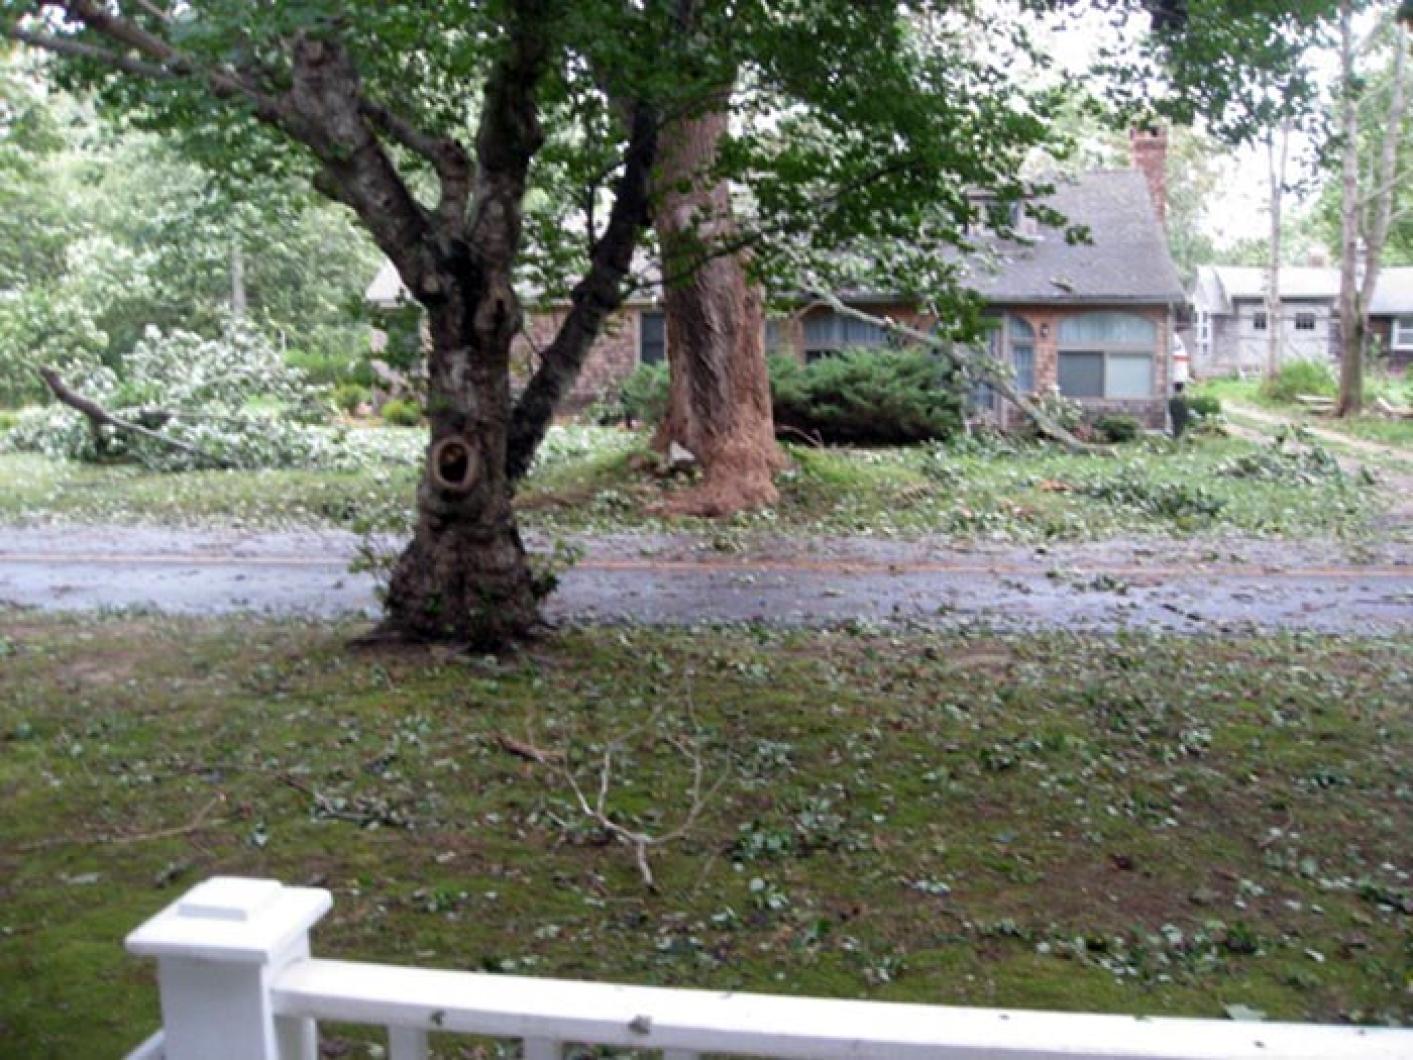 storm damage leaves yard